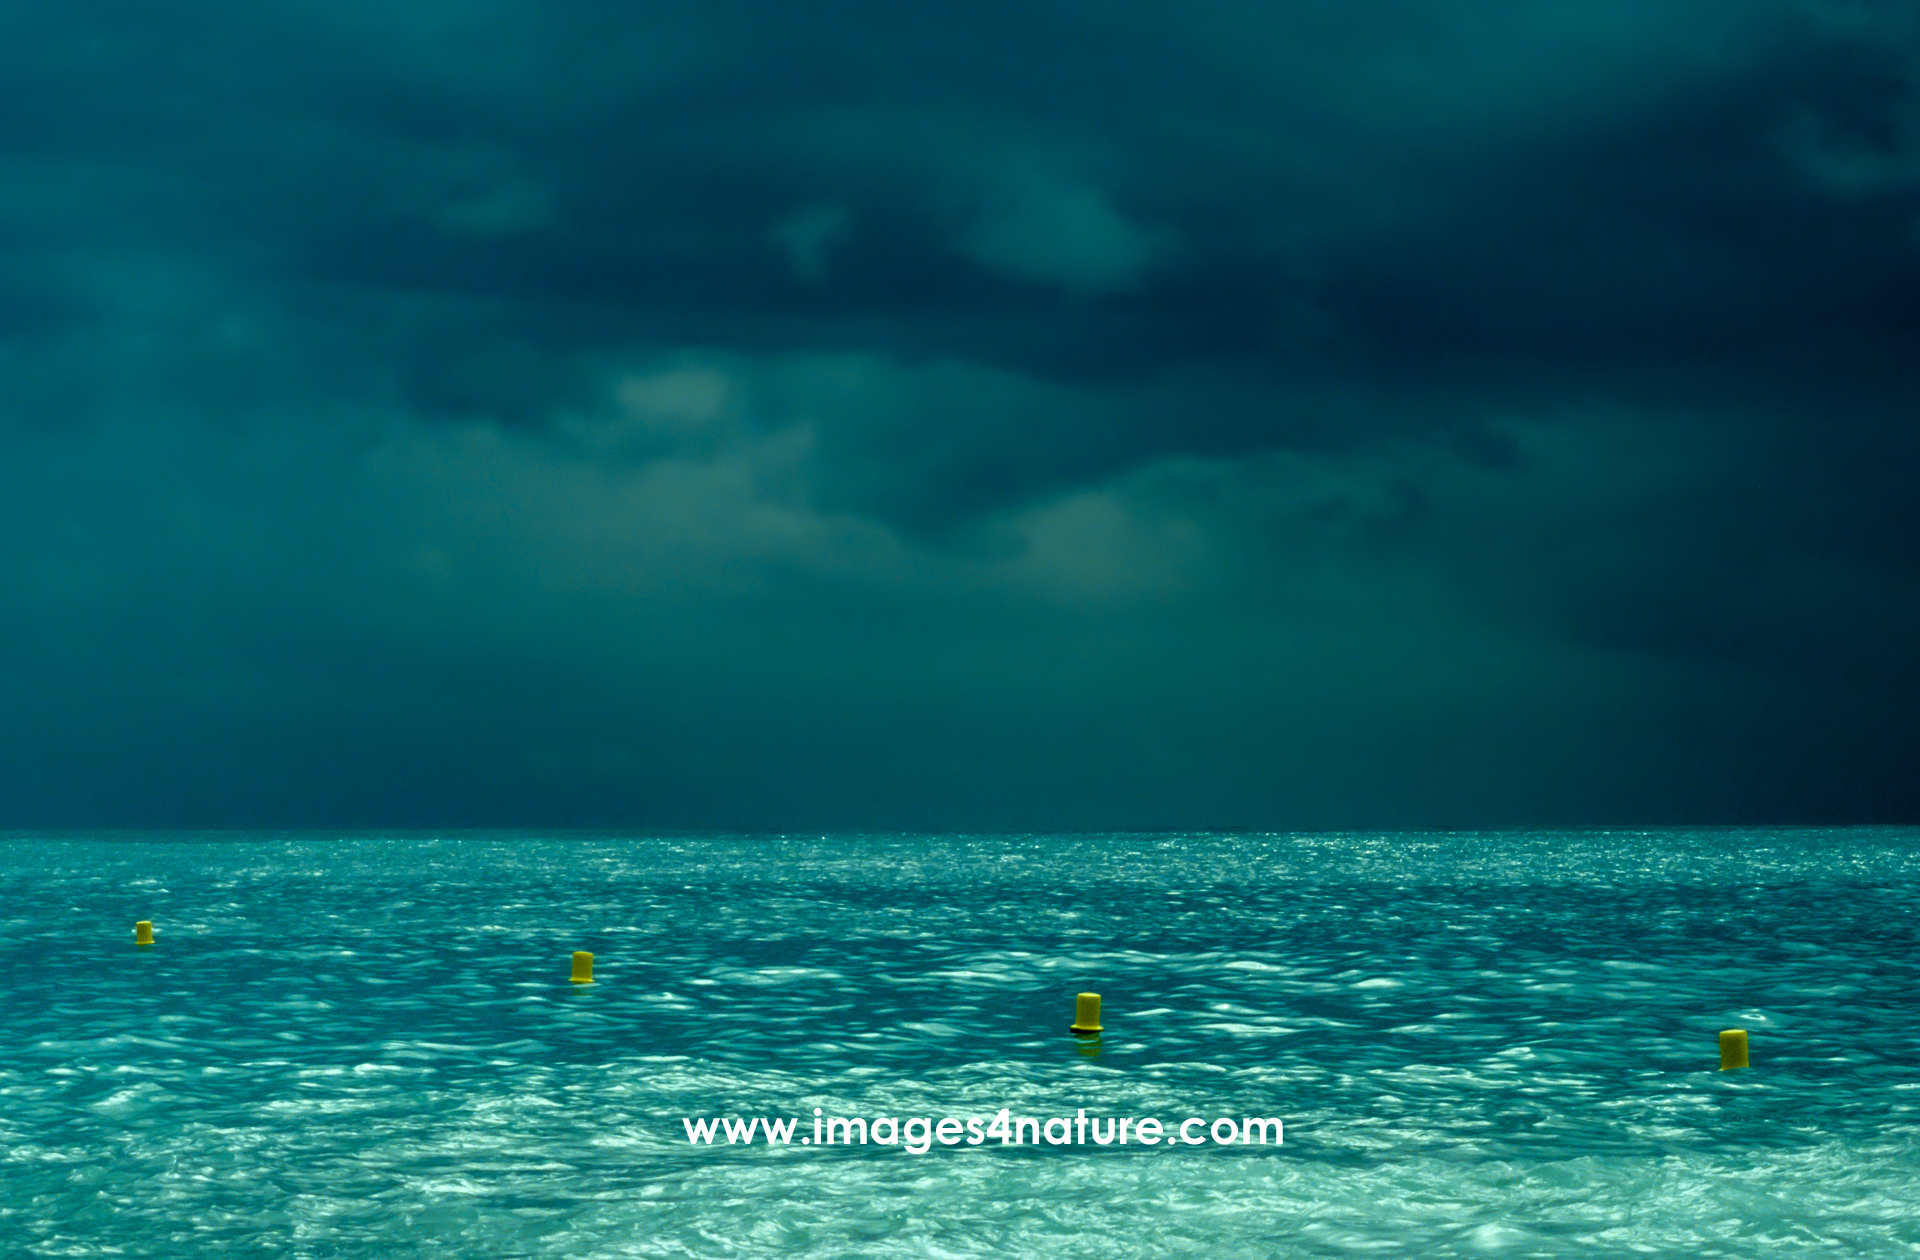 Dark thunderstorm clouds over calm turquoise mediterranean sea